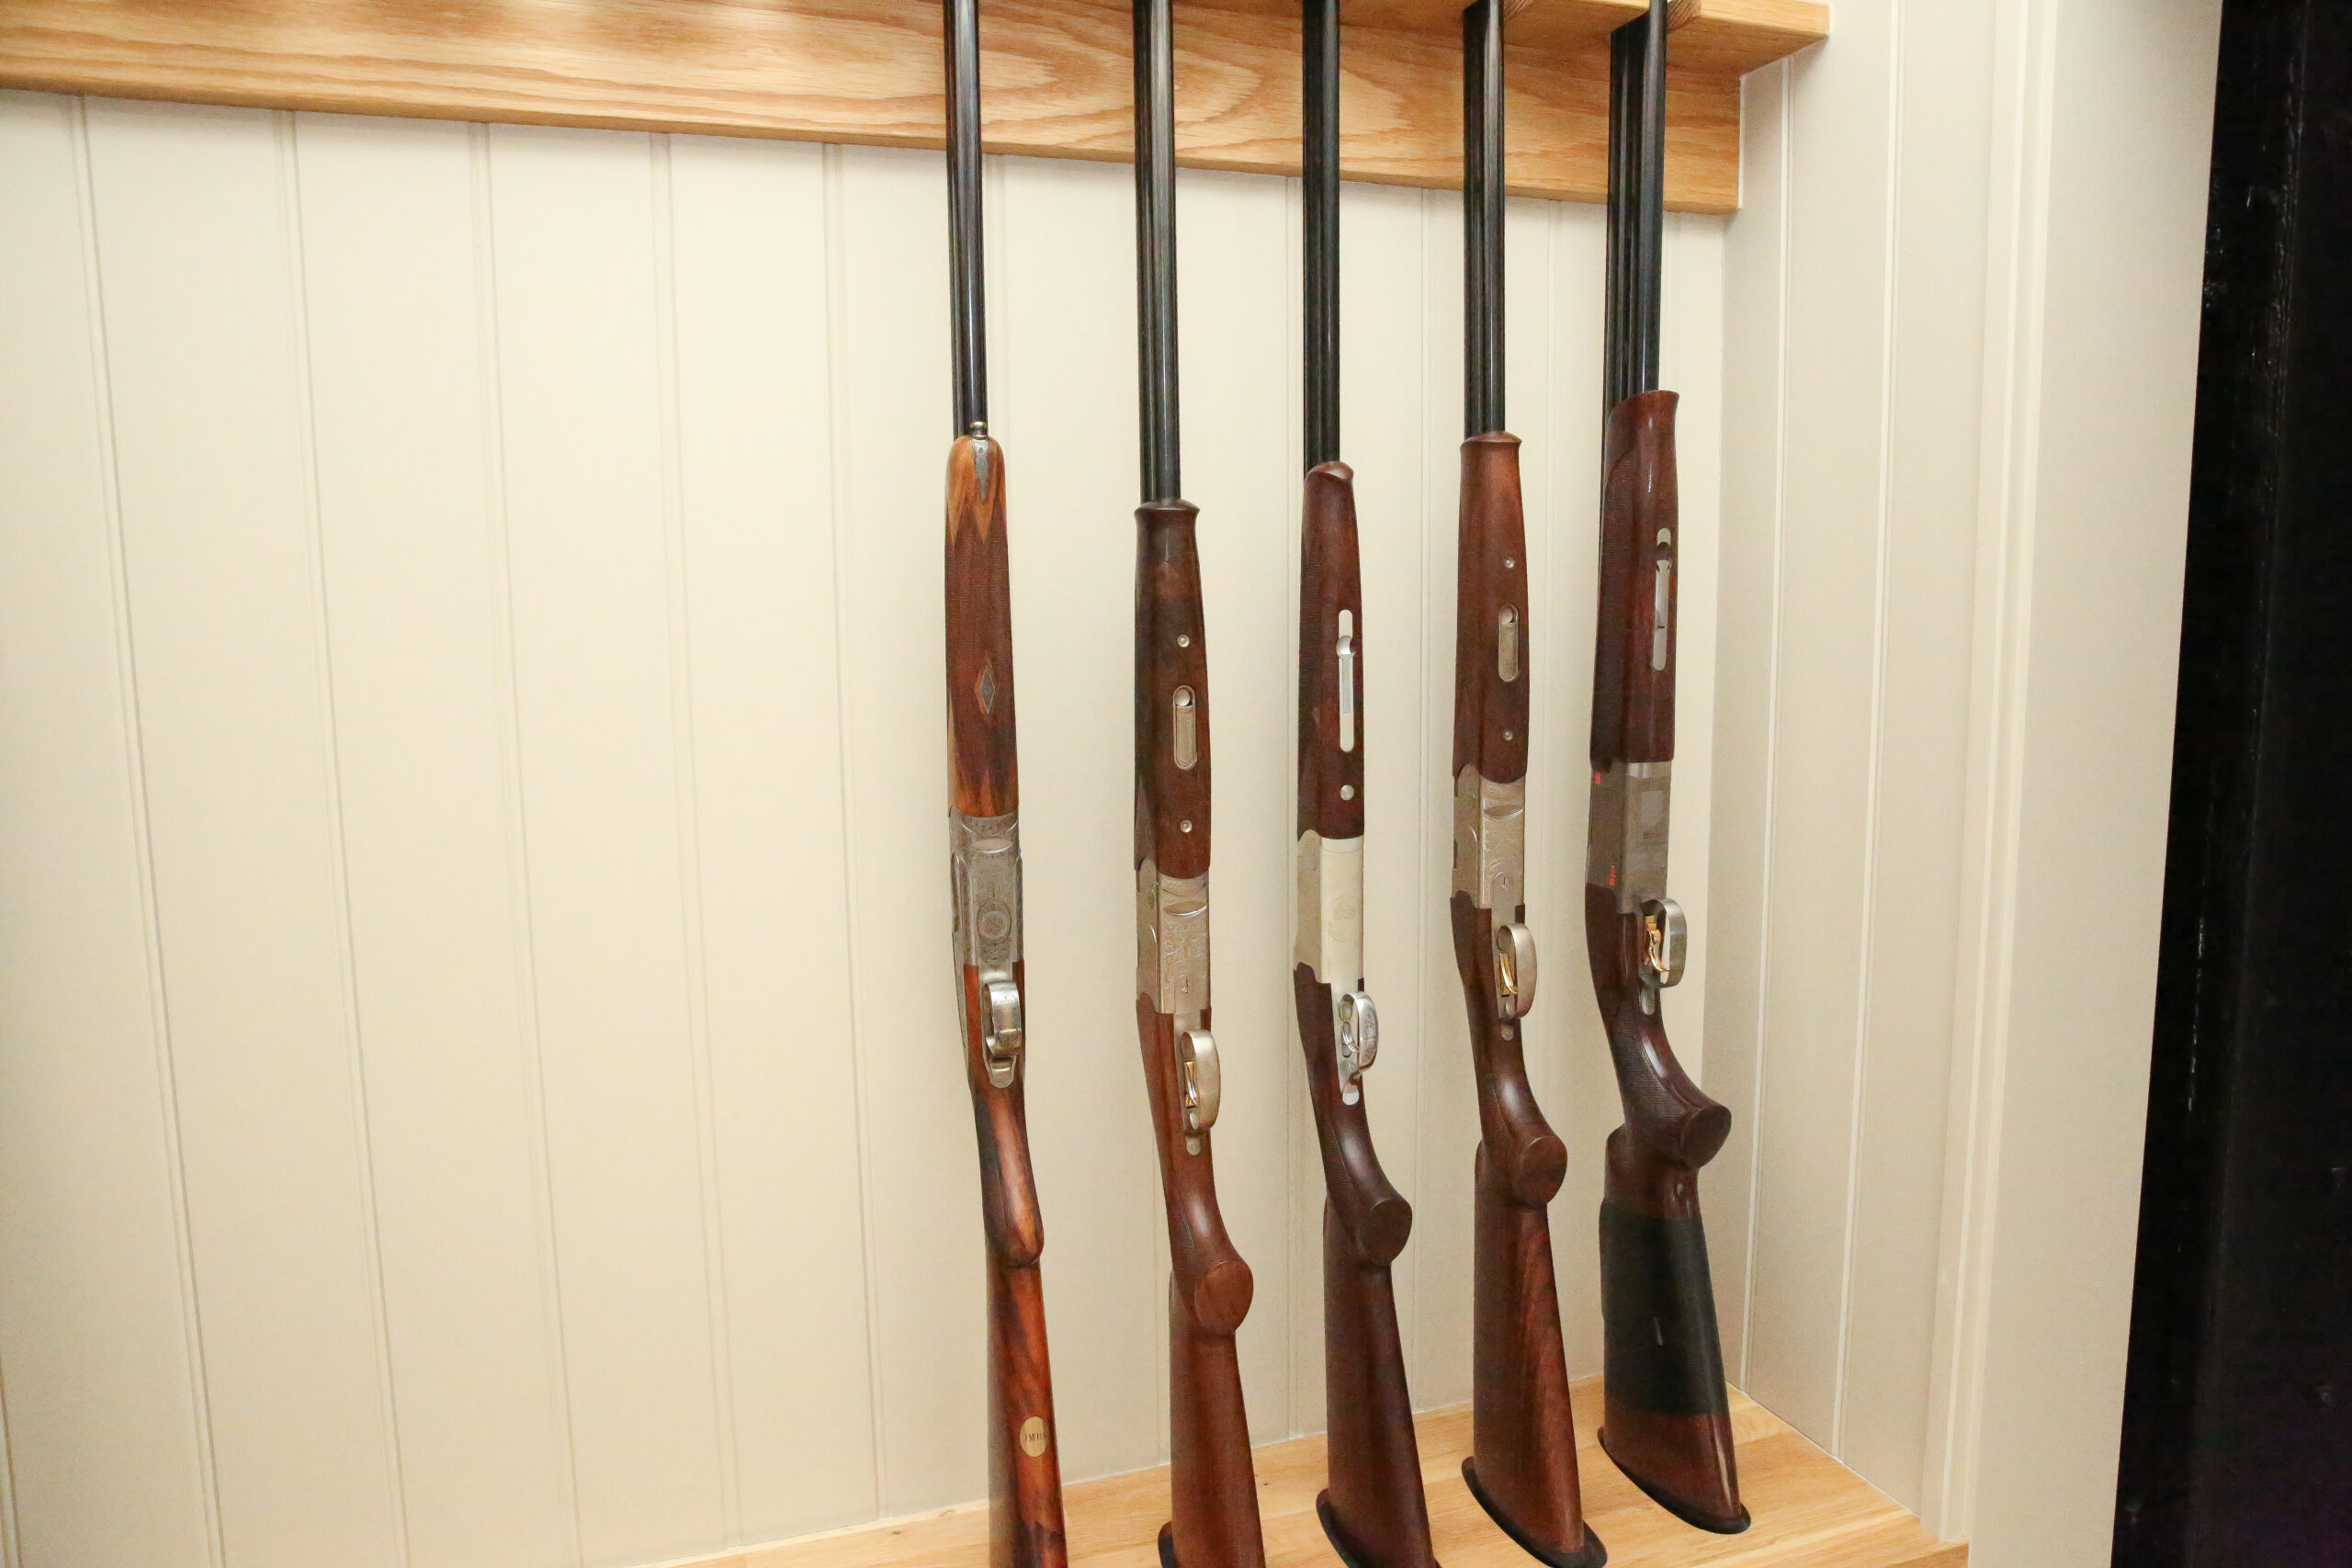 Gun cabinetry